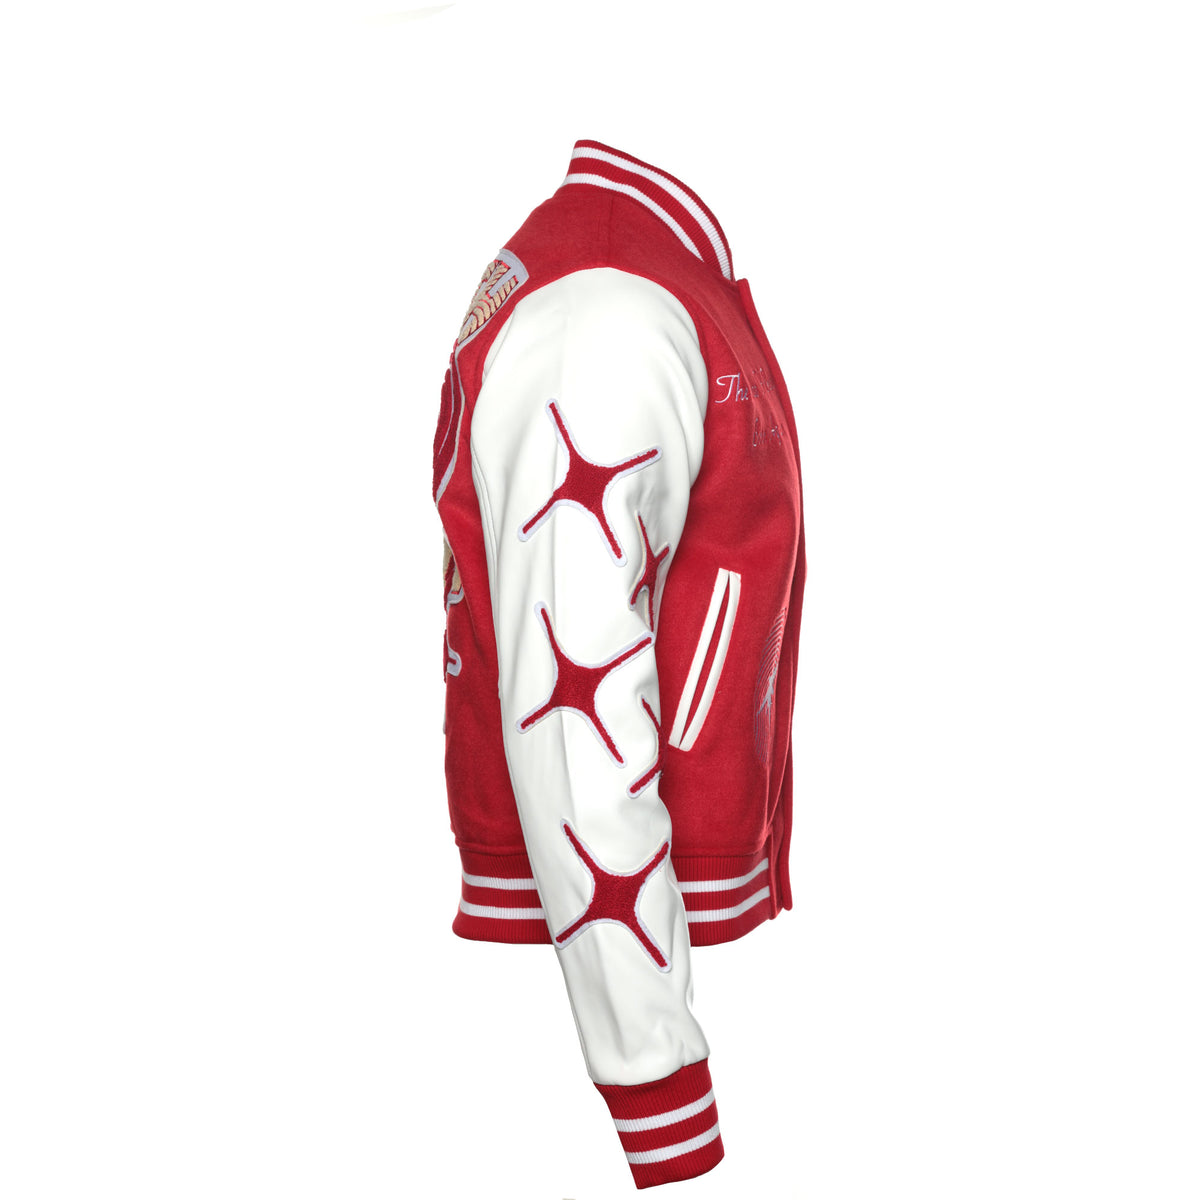 Retrovert "Rebirth" Men's Red Varsity Jacket - SIZE Boutique